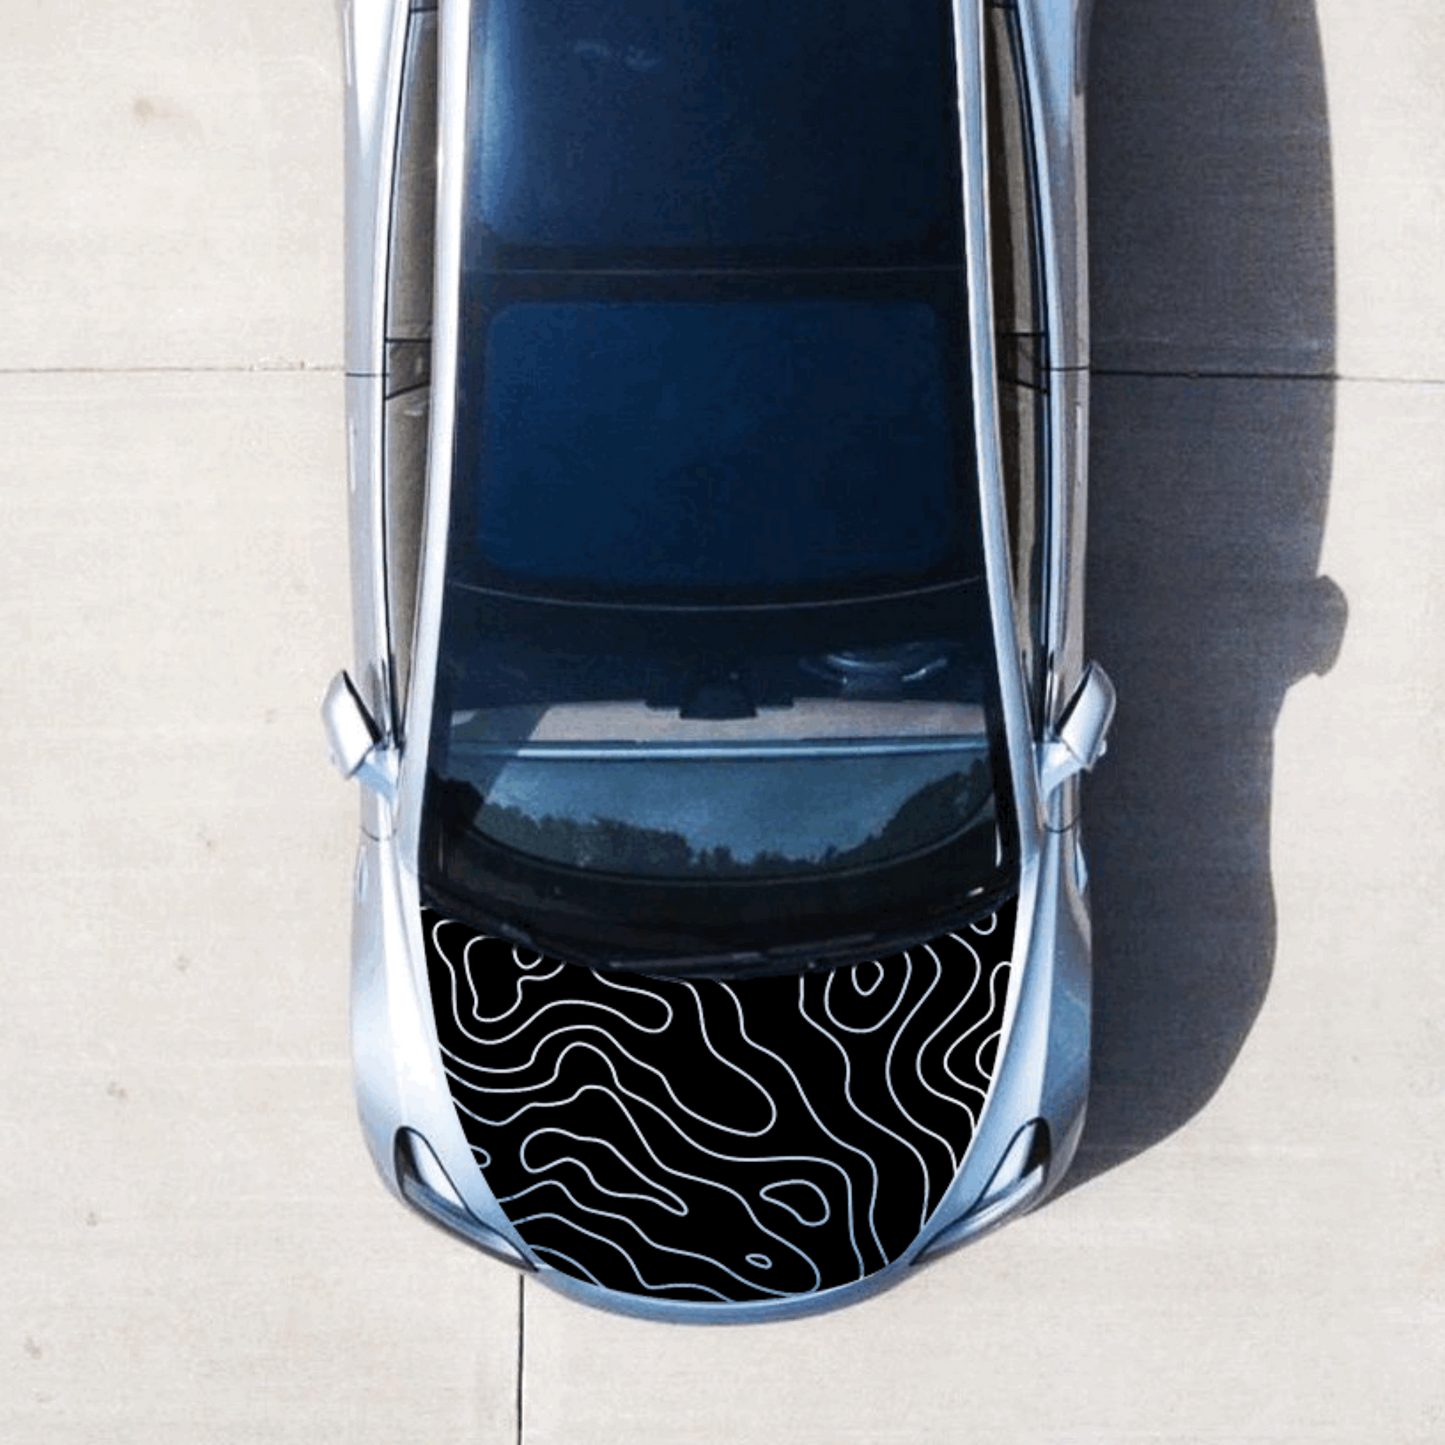 Topography Hood Vinyl Decal Sticker Fits: Tesla Model Y